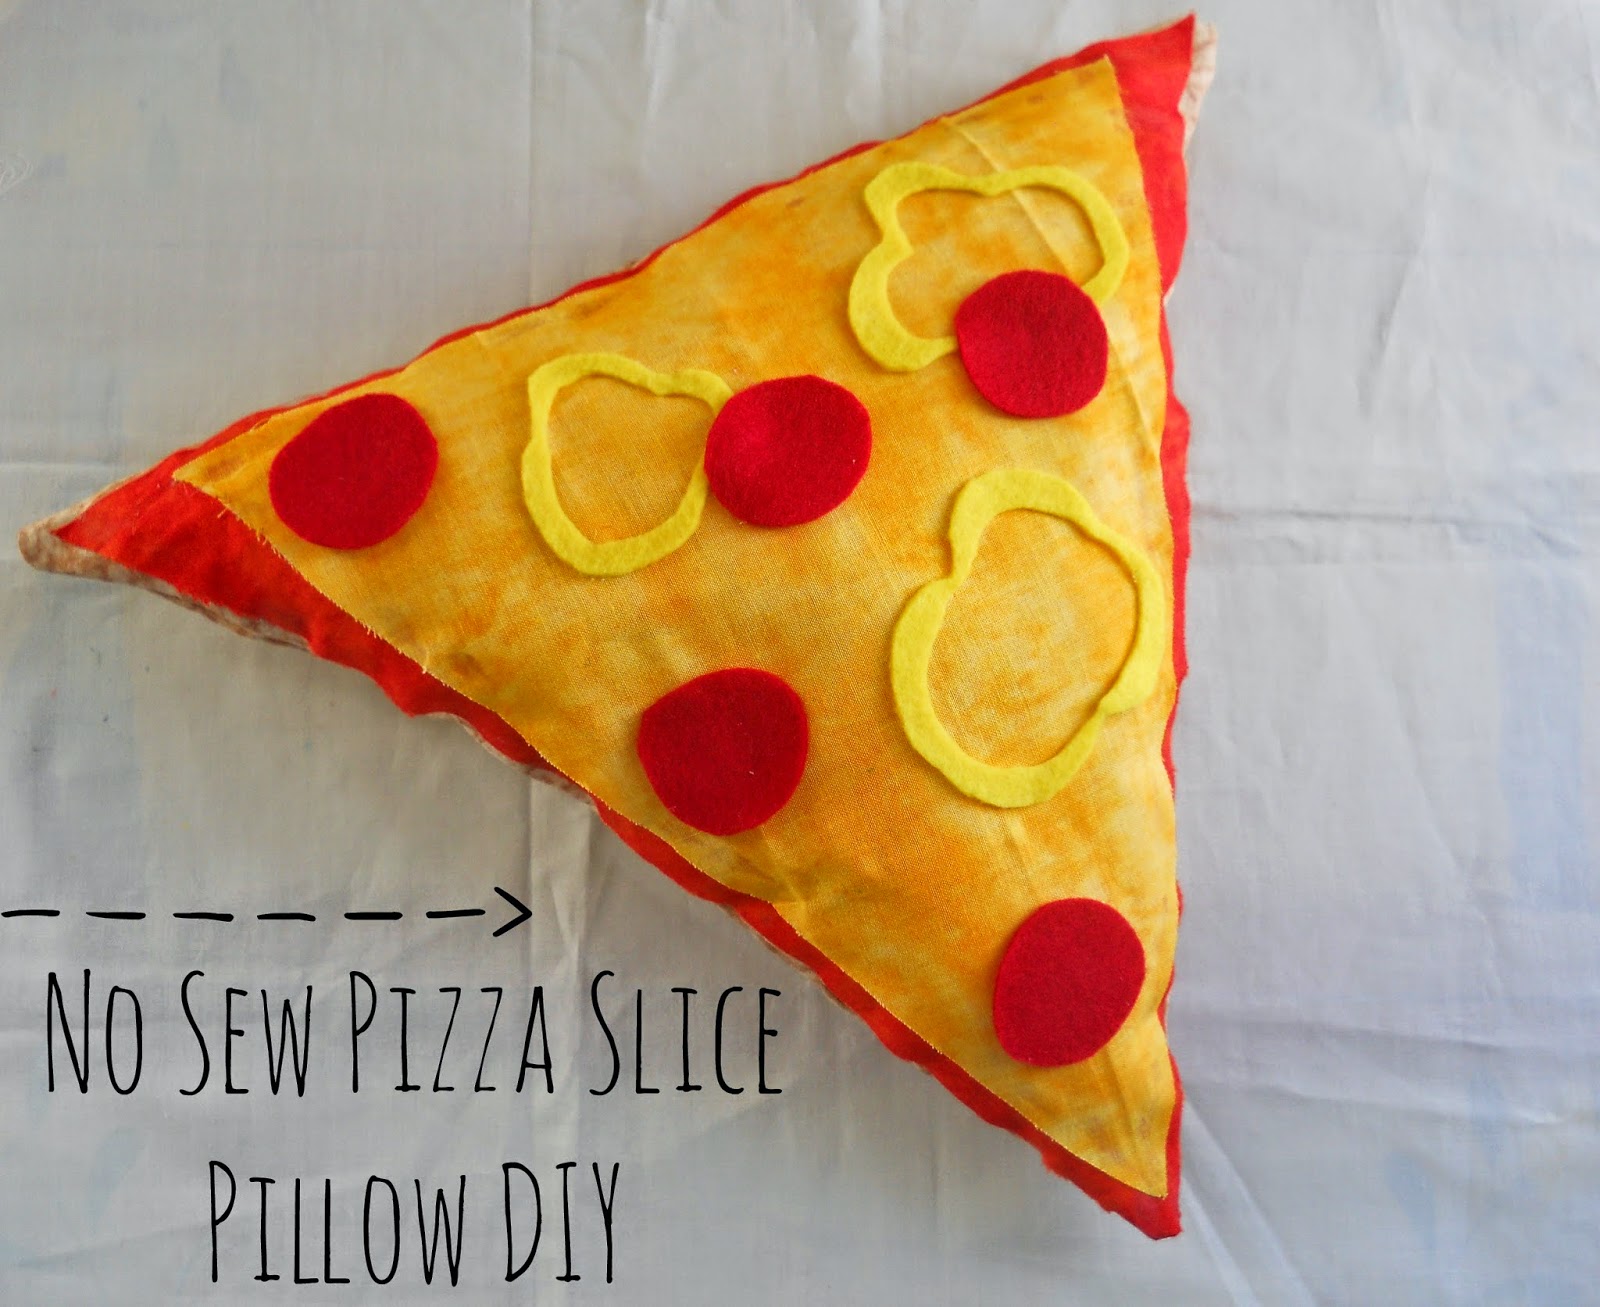 12.75" Pizza Slice Throw Pillow